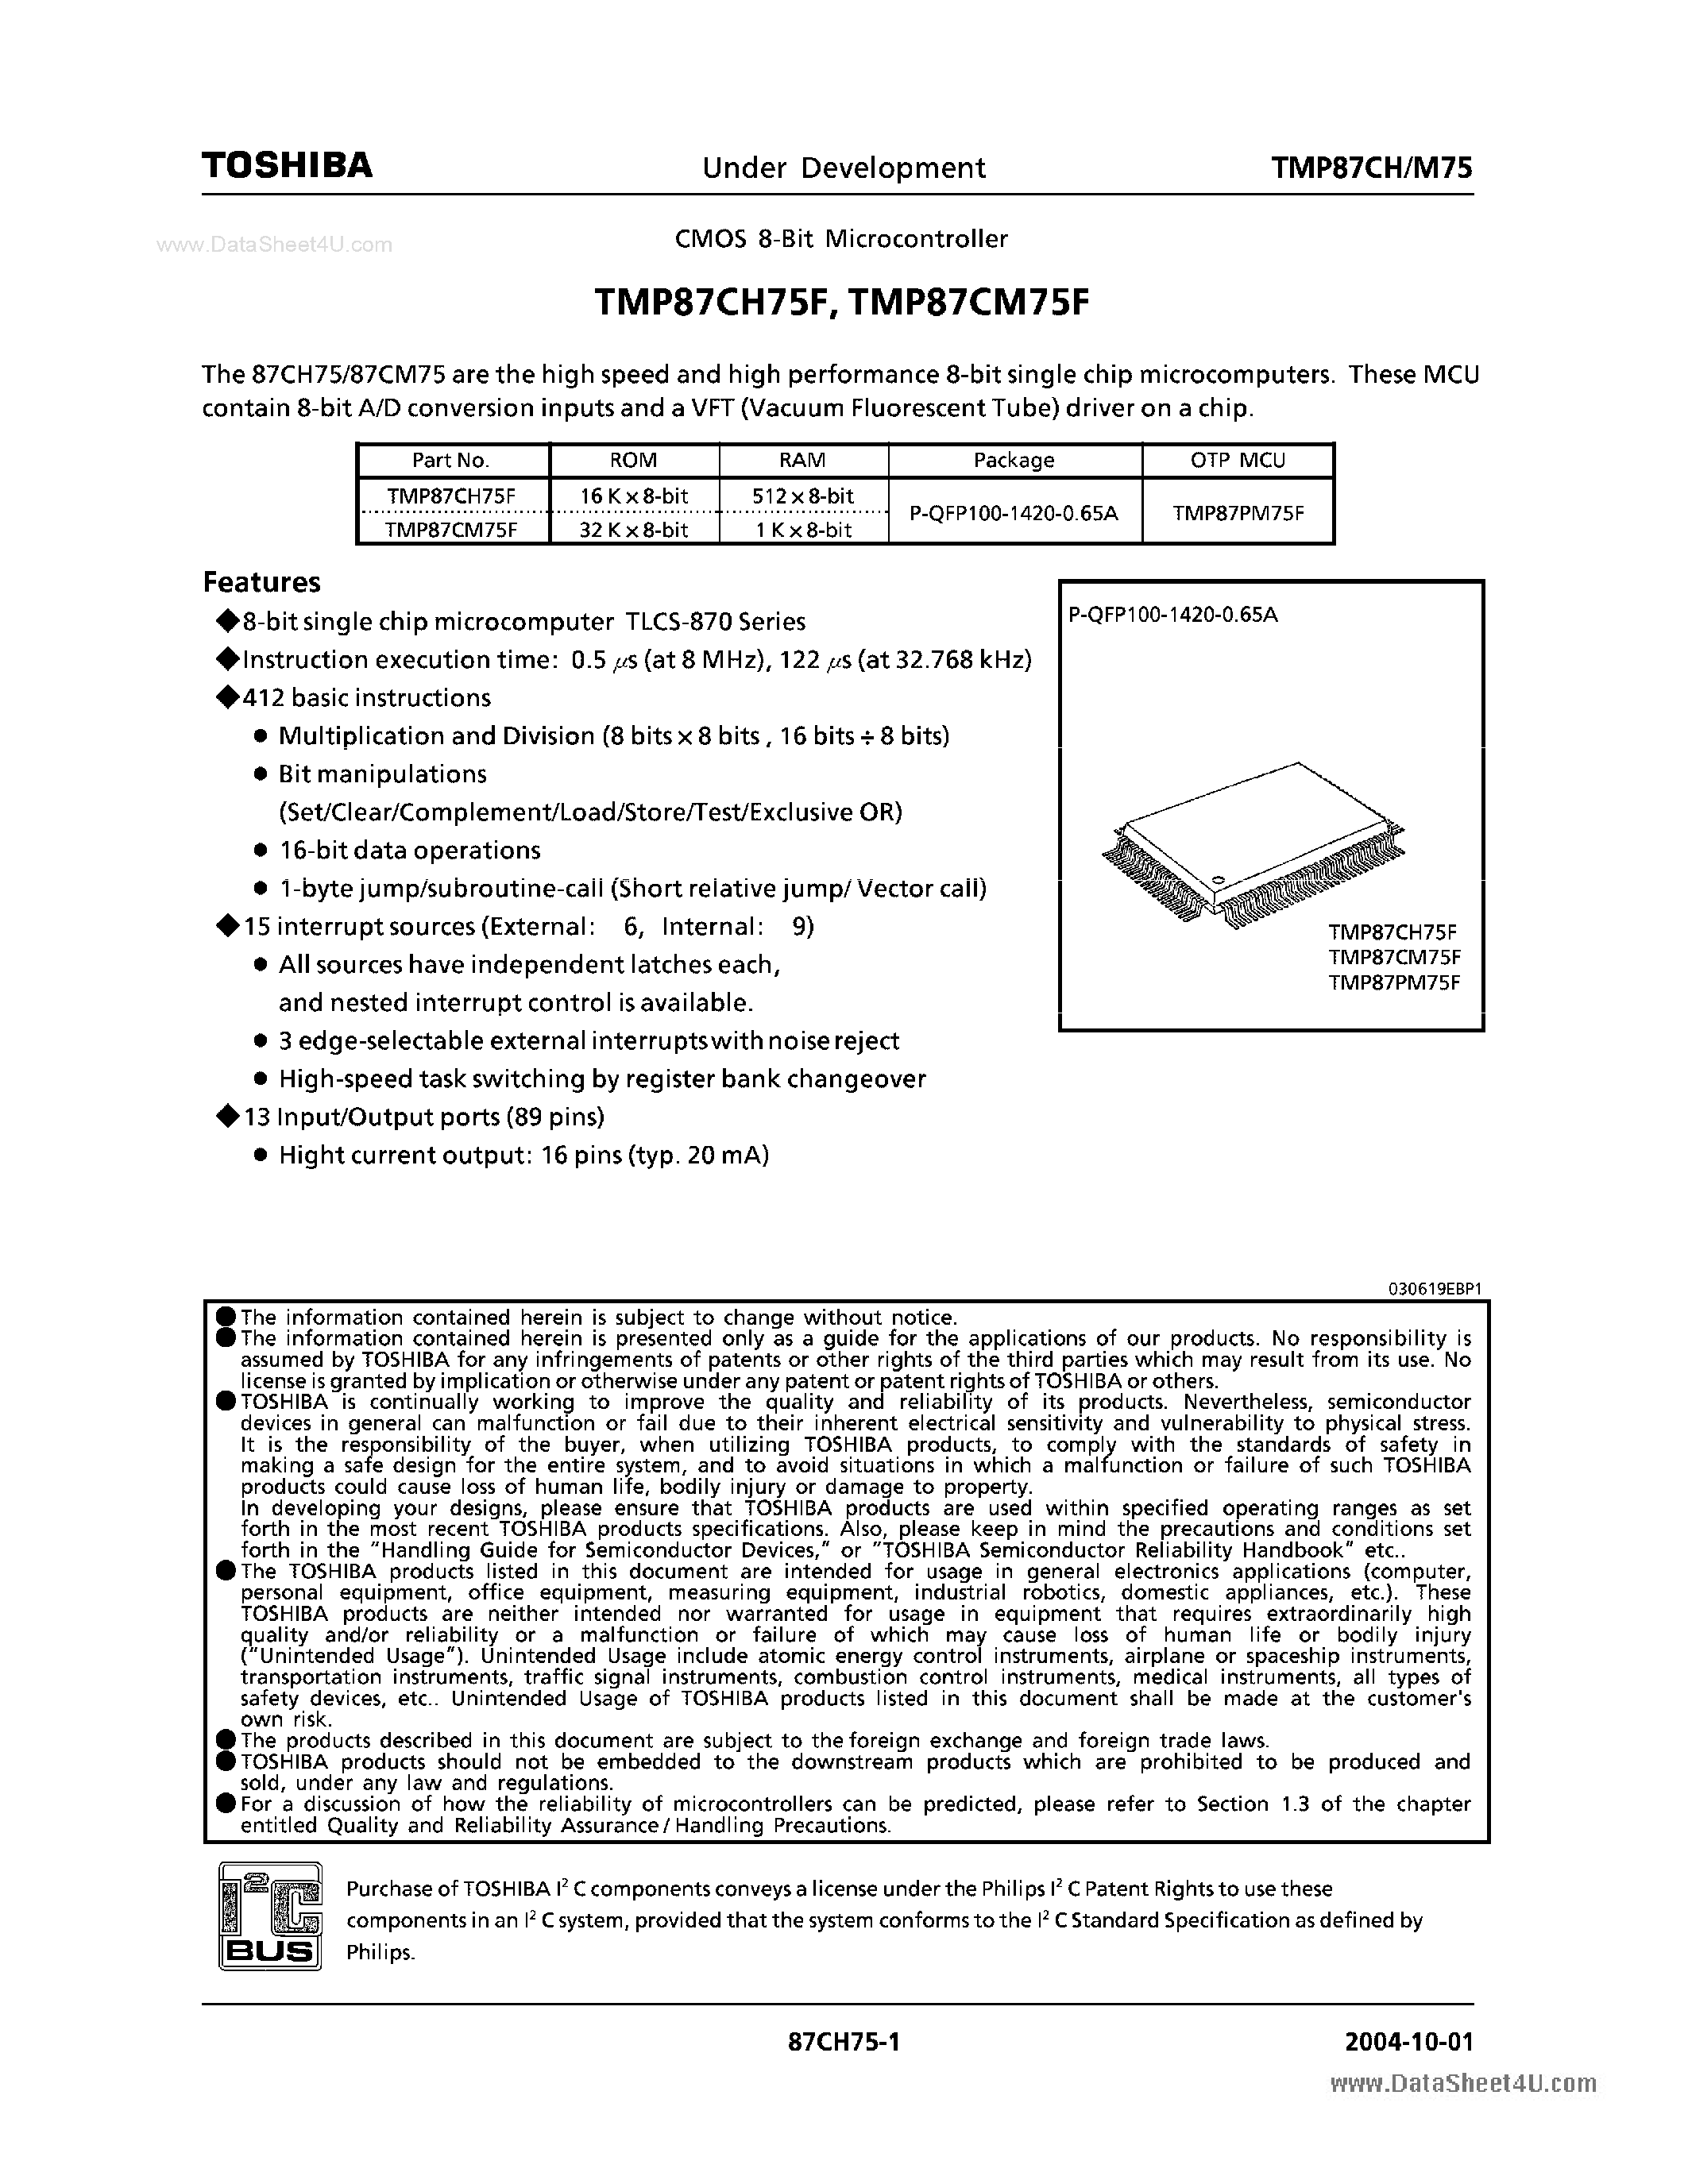 Datasheet 87CM75F - Search -----> TMP87CM75F page 1